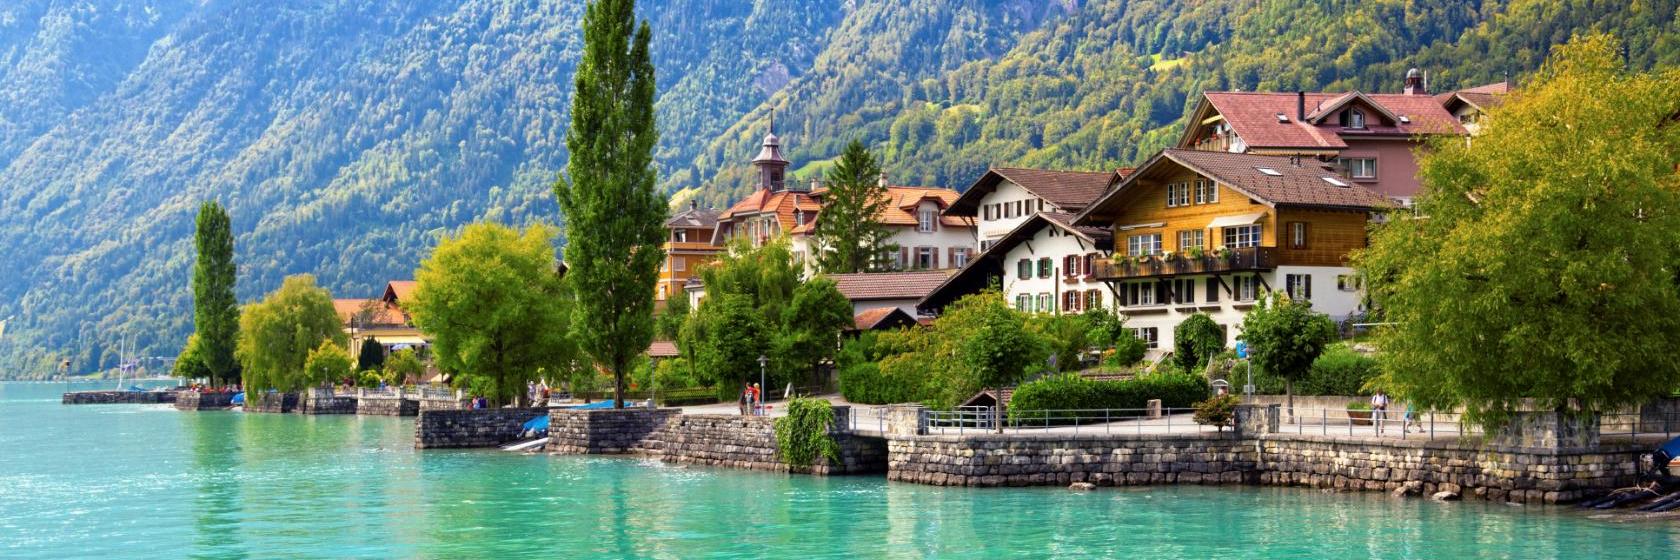 The 10 best hotels & places to stay in Brienz, Switzerland - Brienz hotels